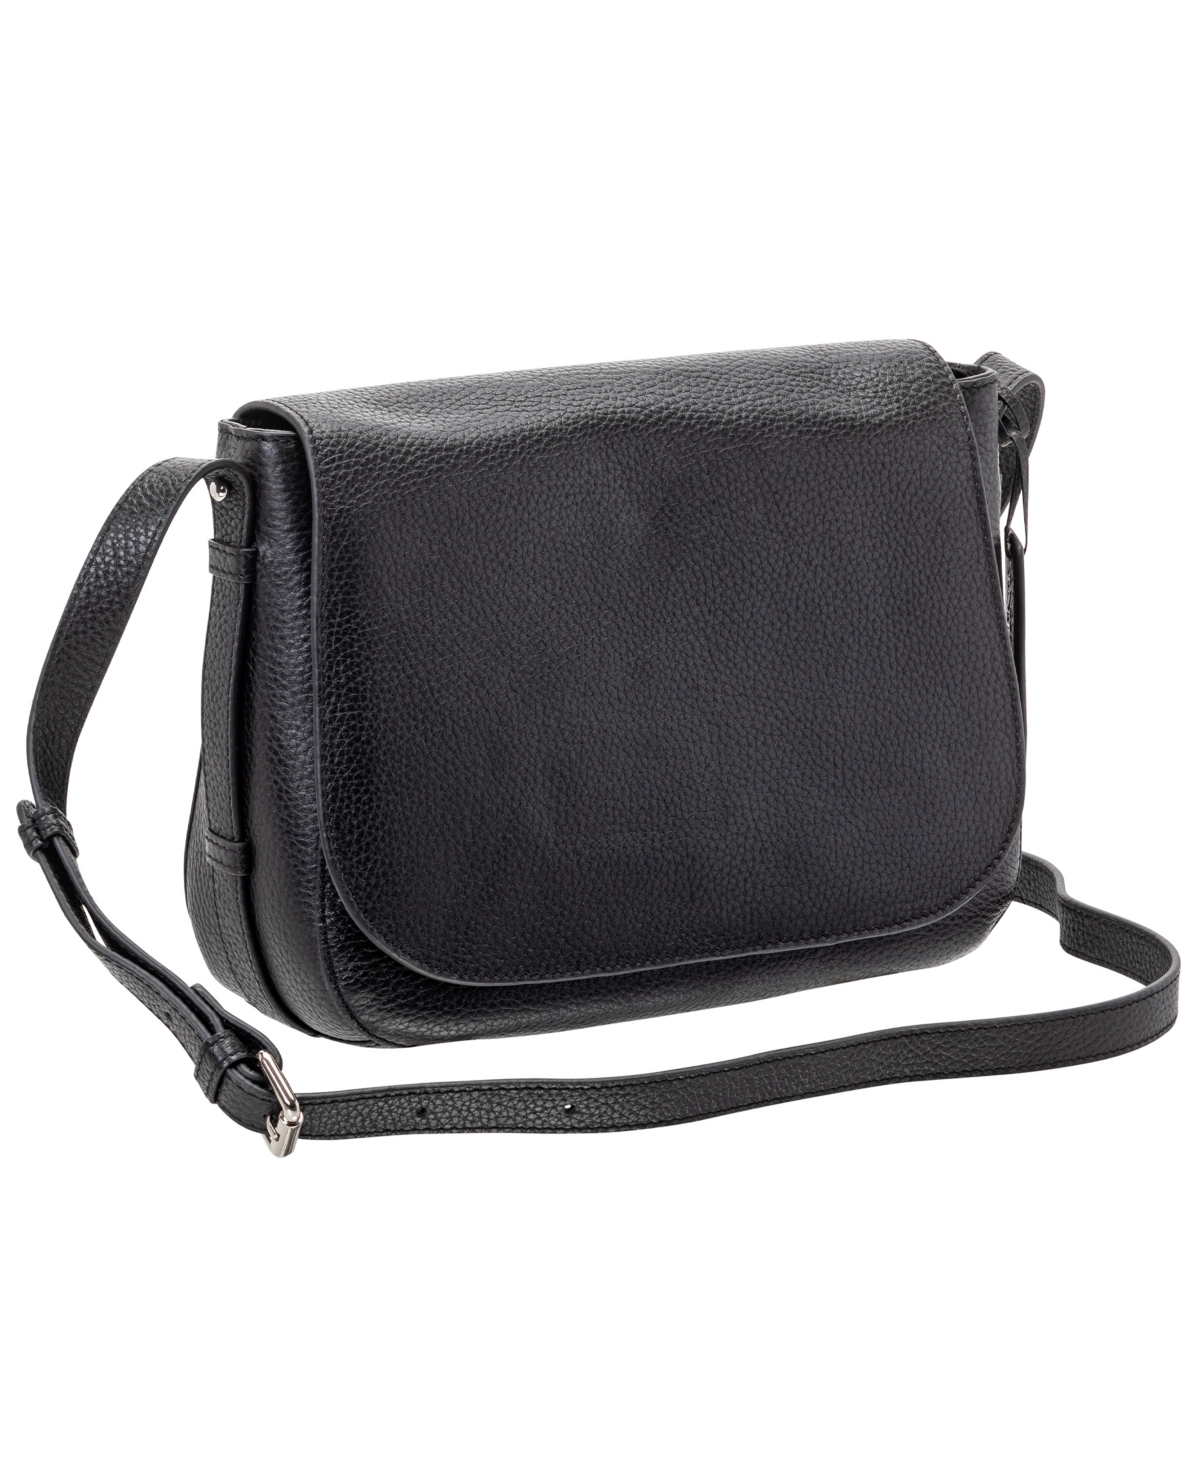 Women's Pebbled Amy Crossbody Handbag - Black